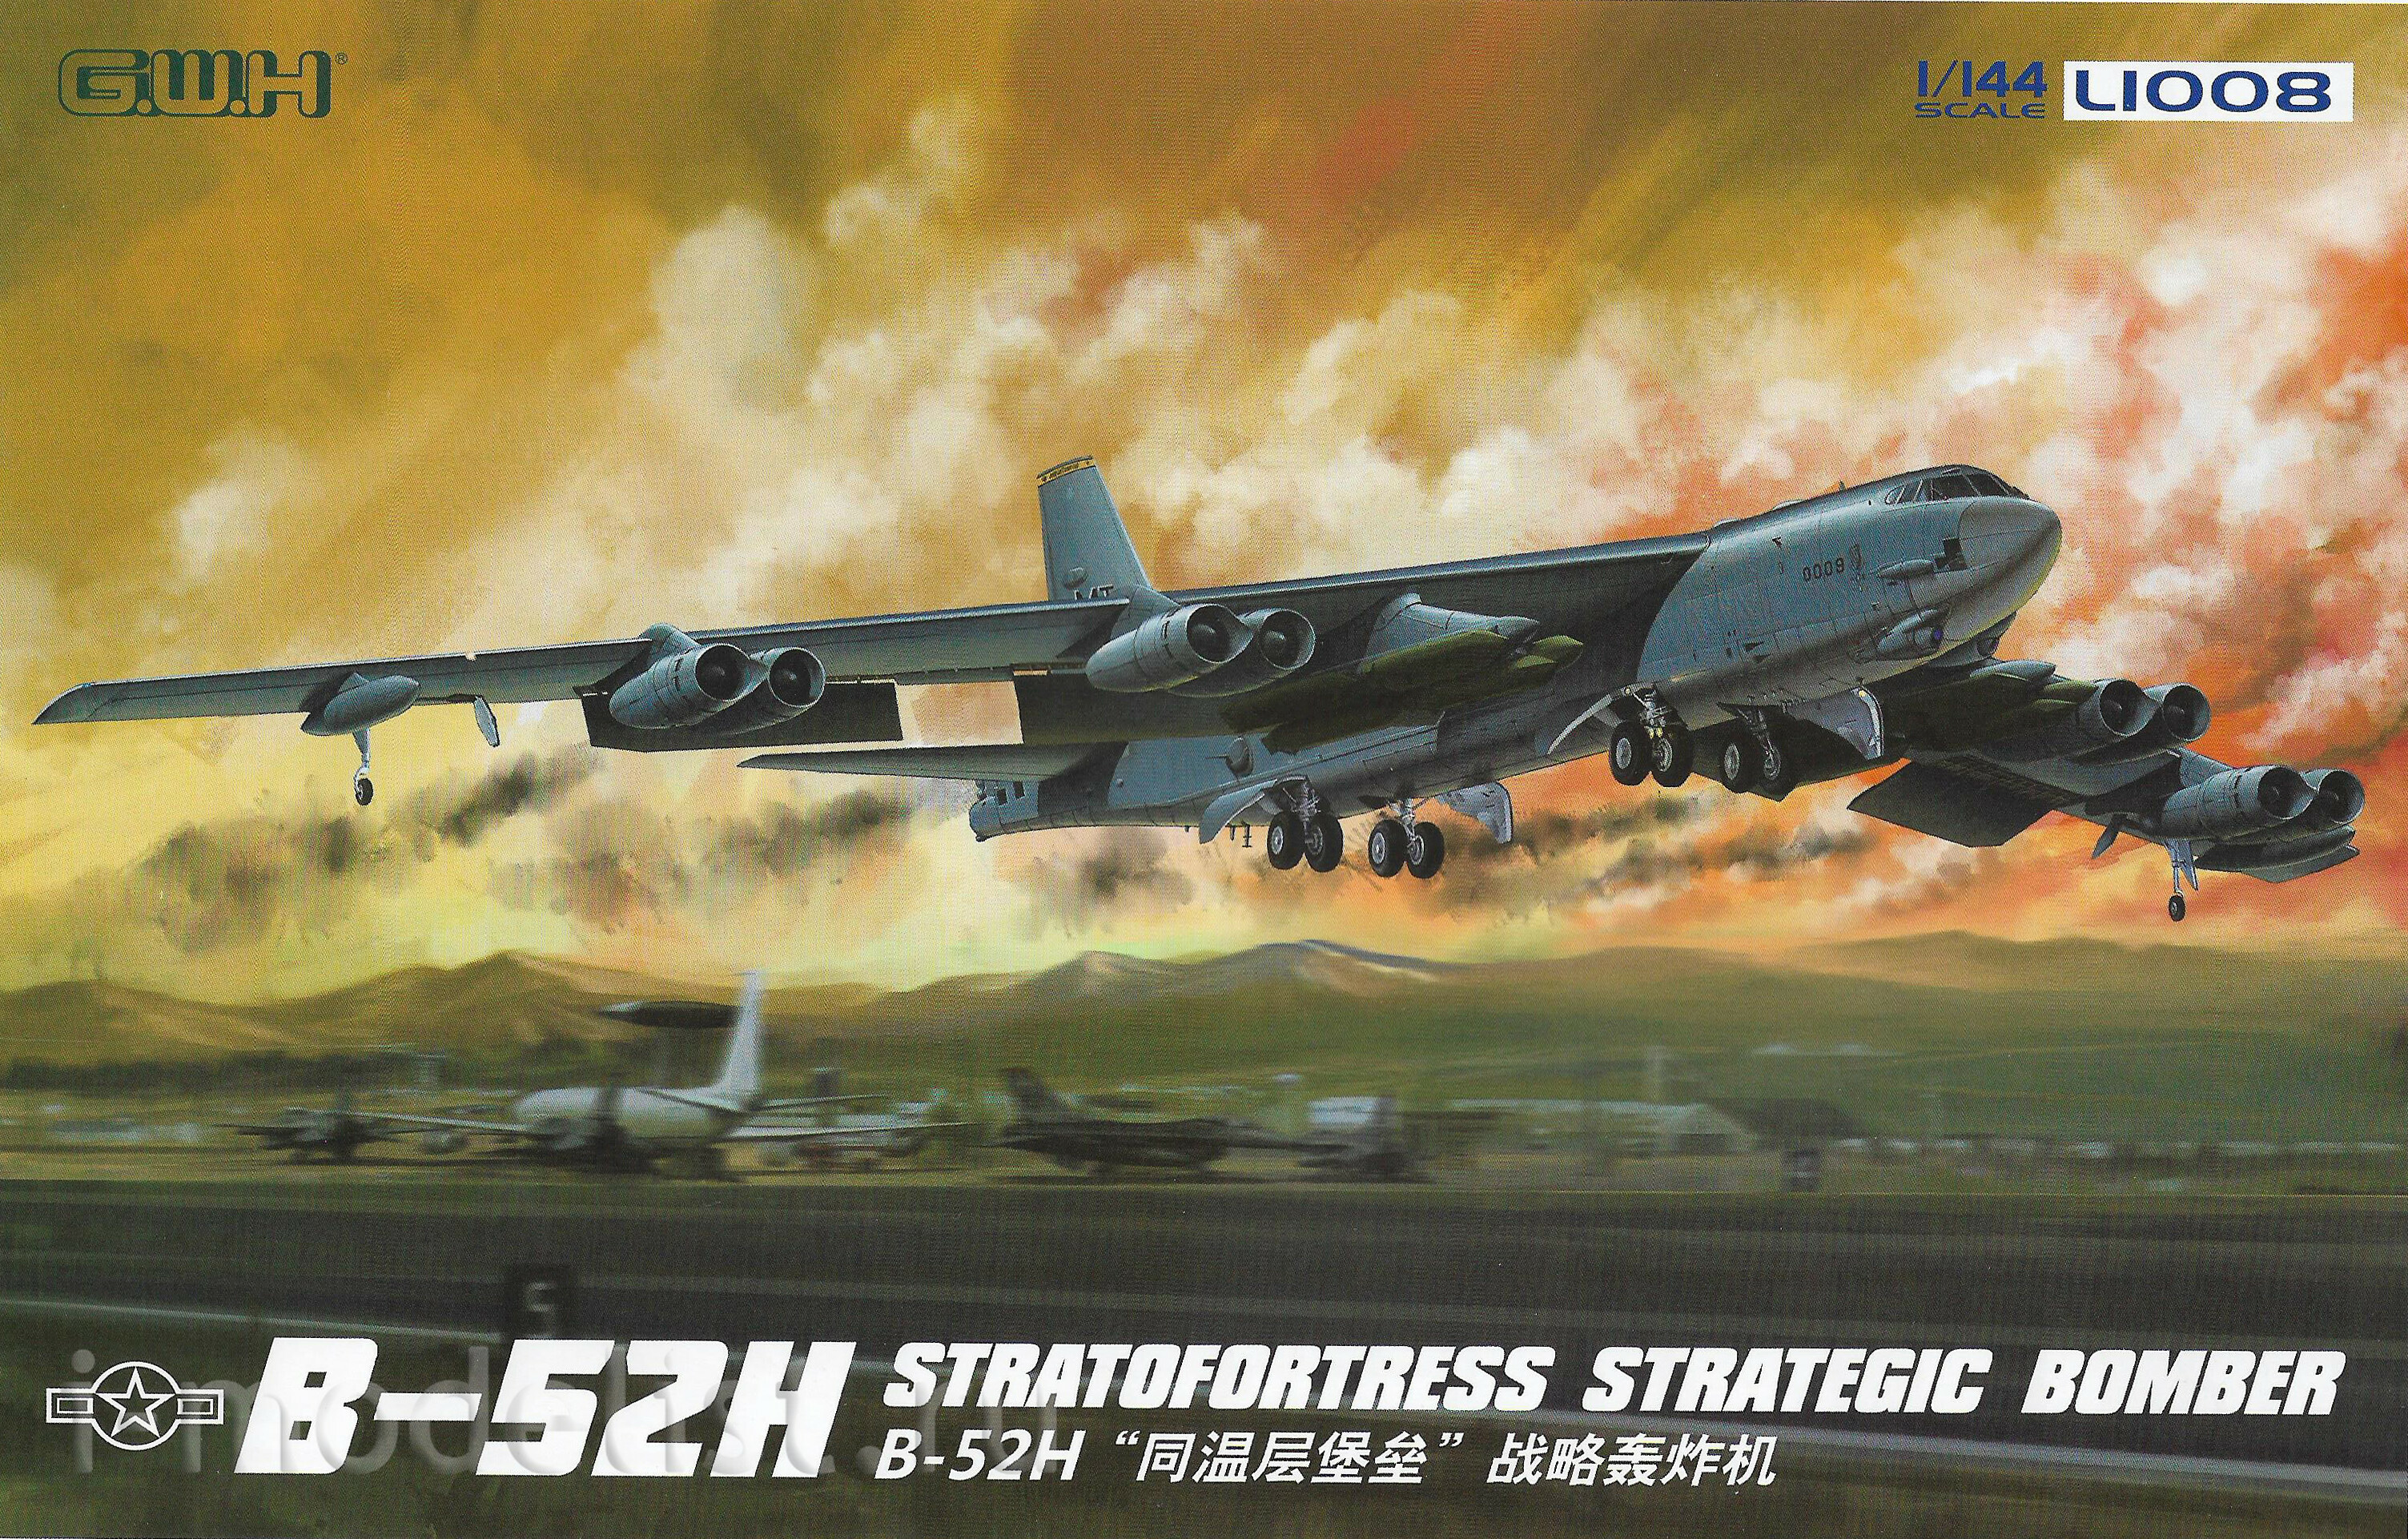 L1008 Great Wall Hobby 1/144 Стратегический бомбардировщик B-52H Stratofortress